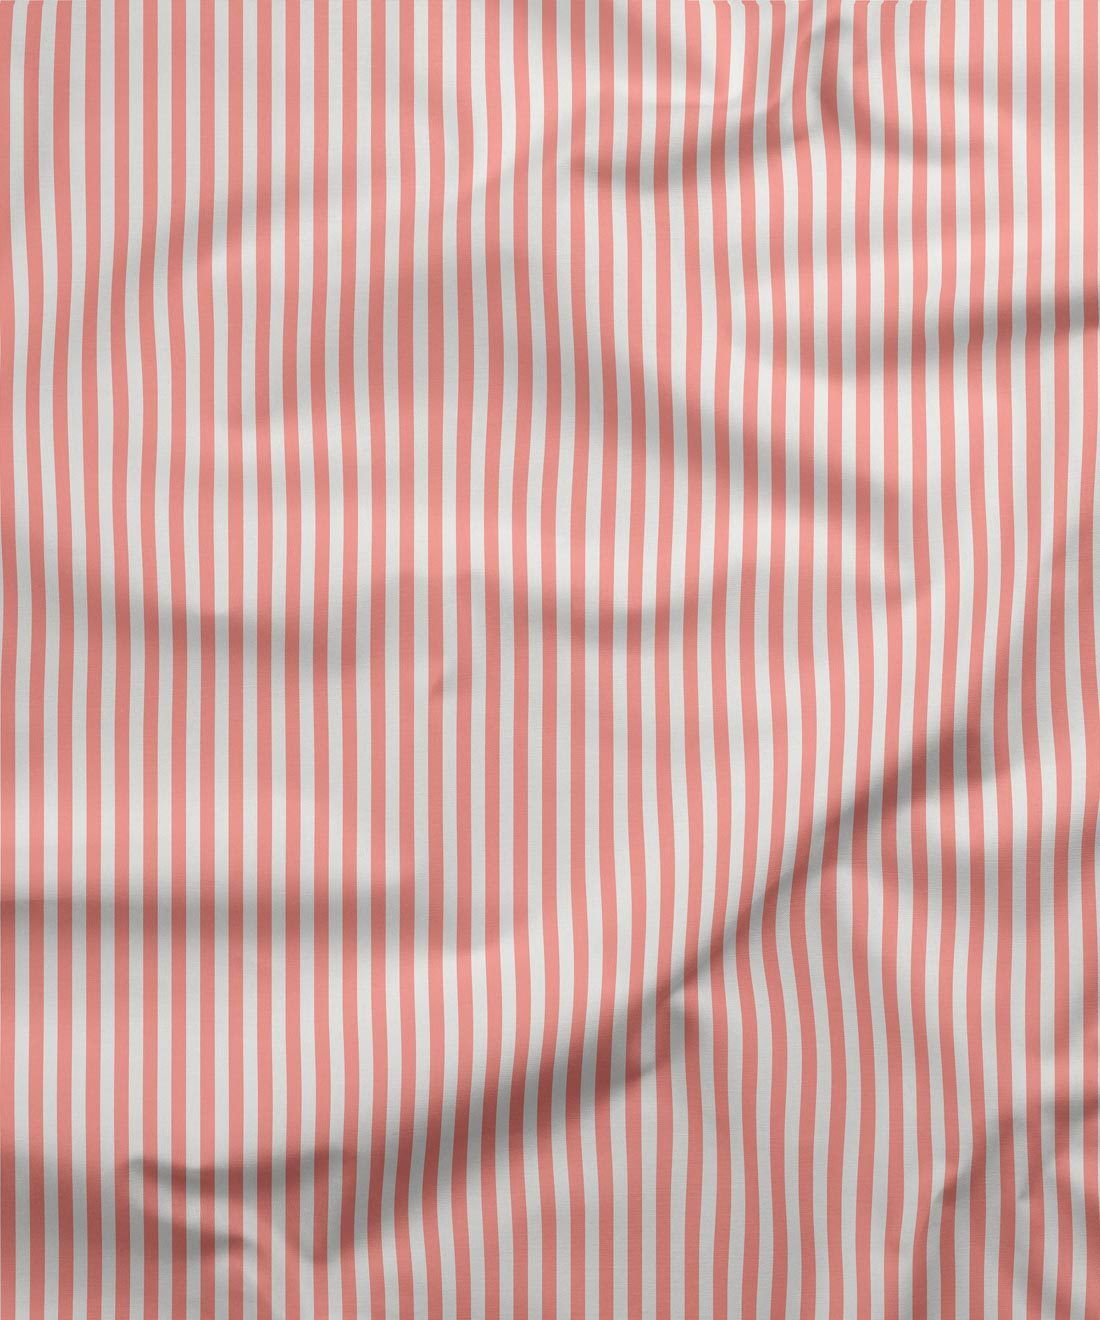 Candy Stripe Fabric Pink